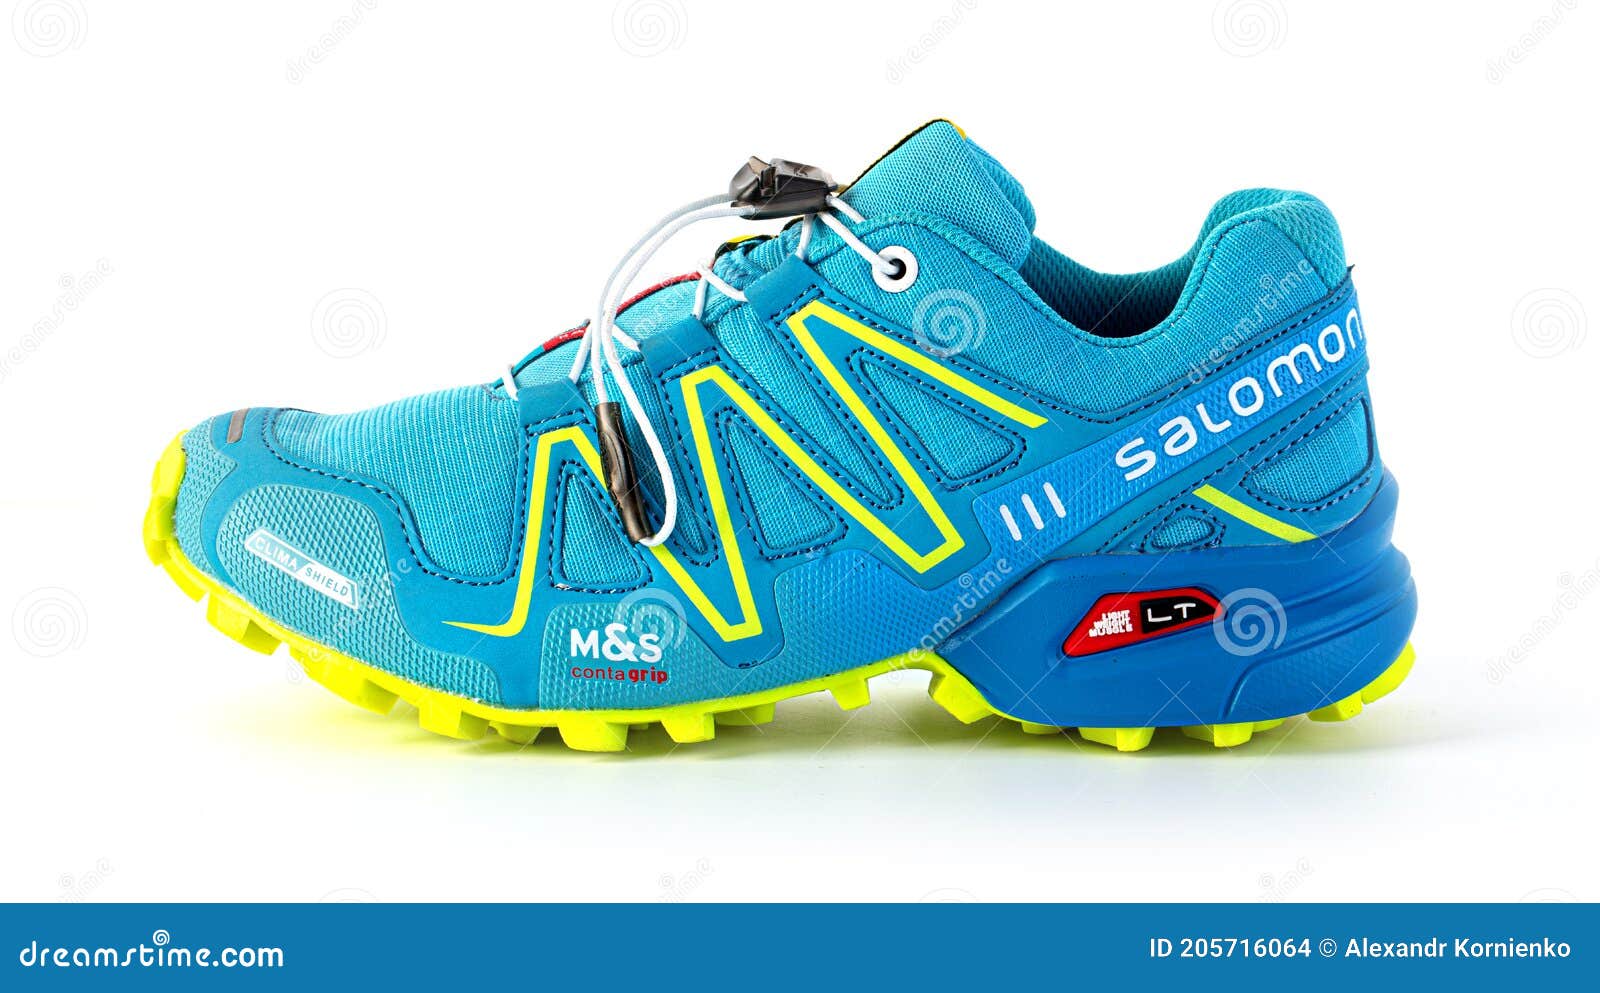 Salomon Sports Shoes on White Background Editorial Image - Image of health, mountain: 205716064